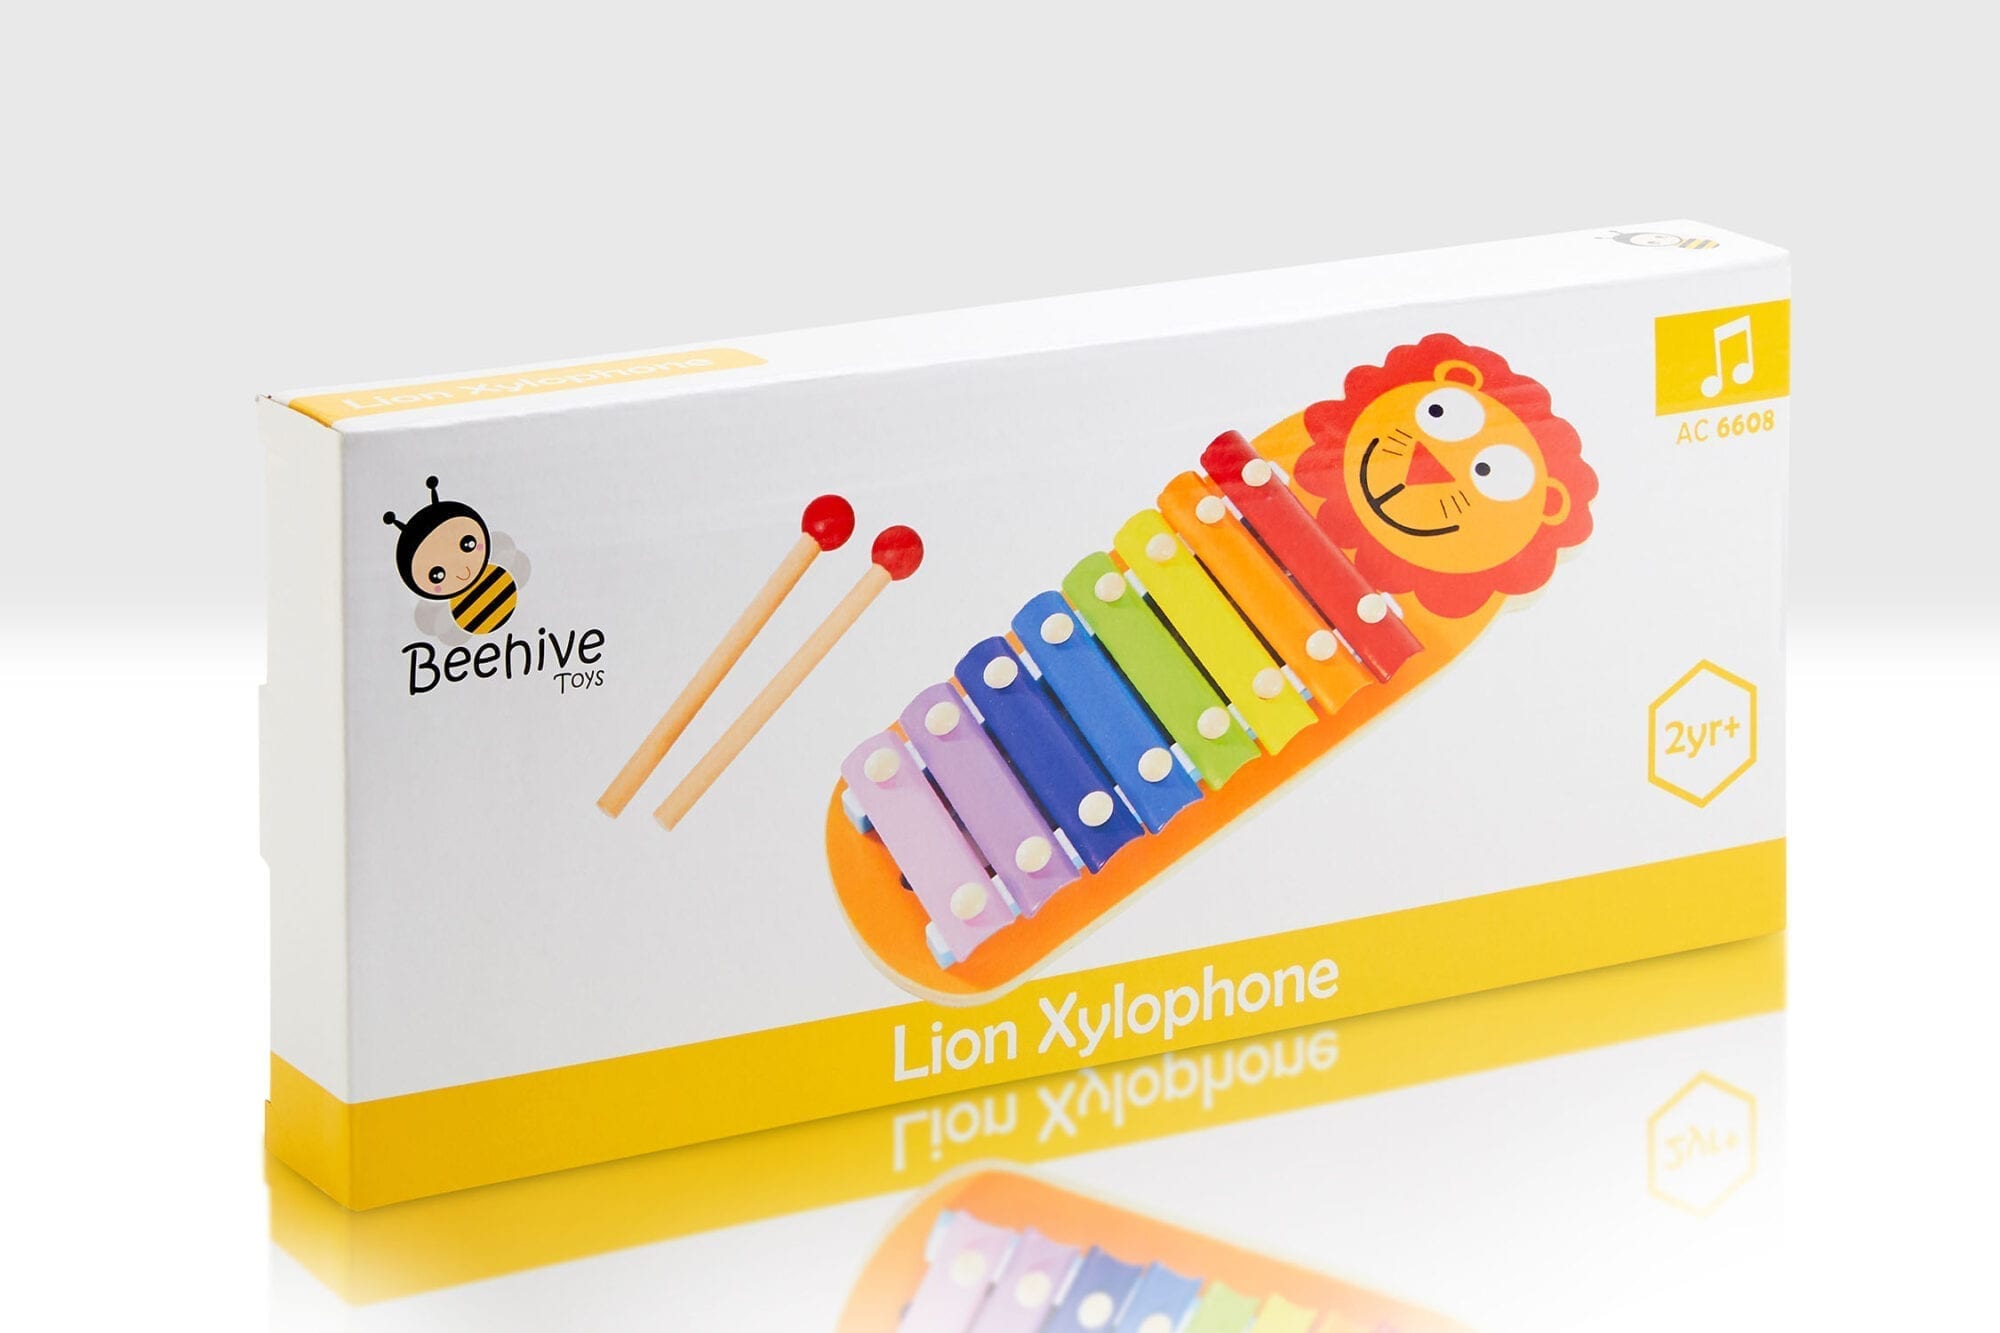 Lion Xylophone